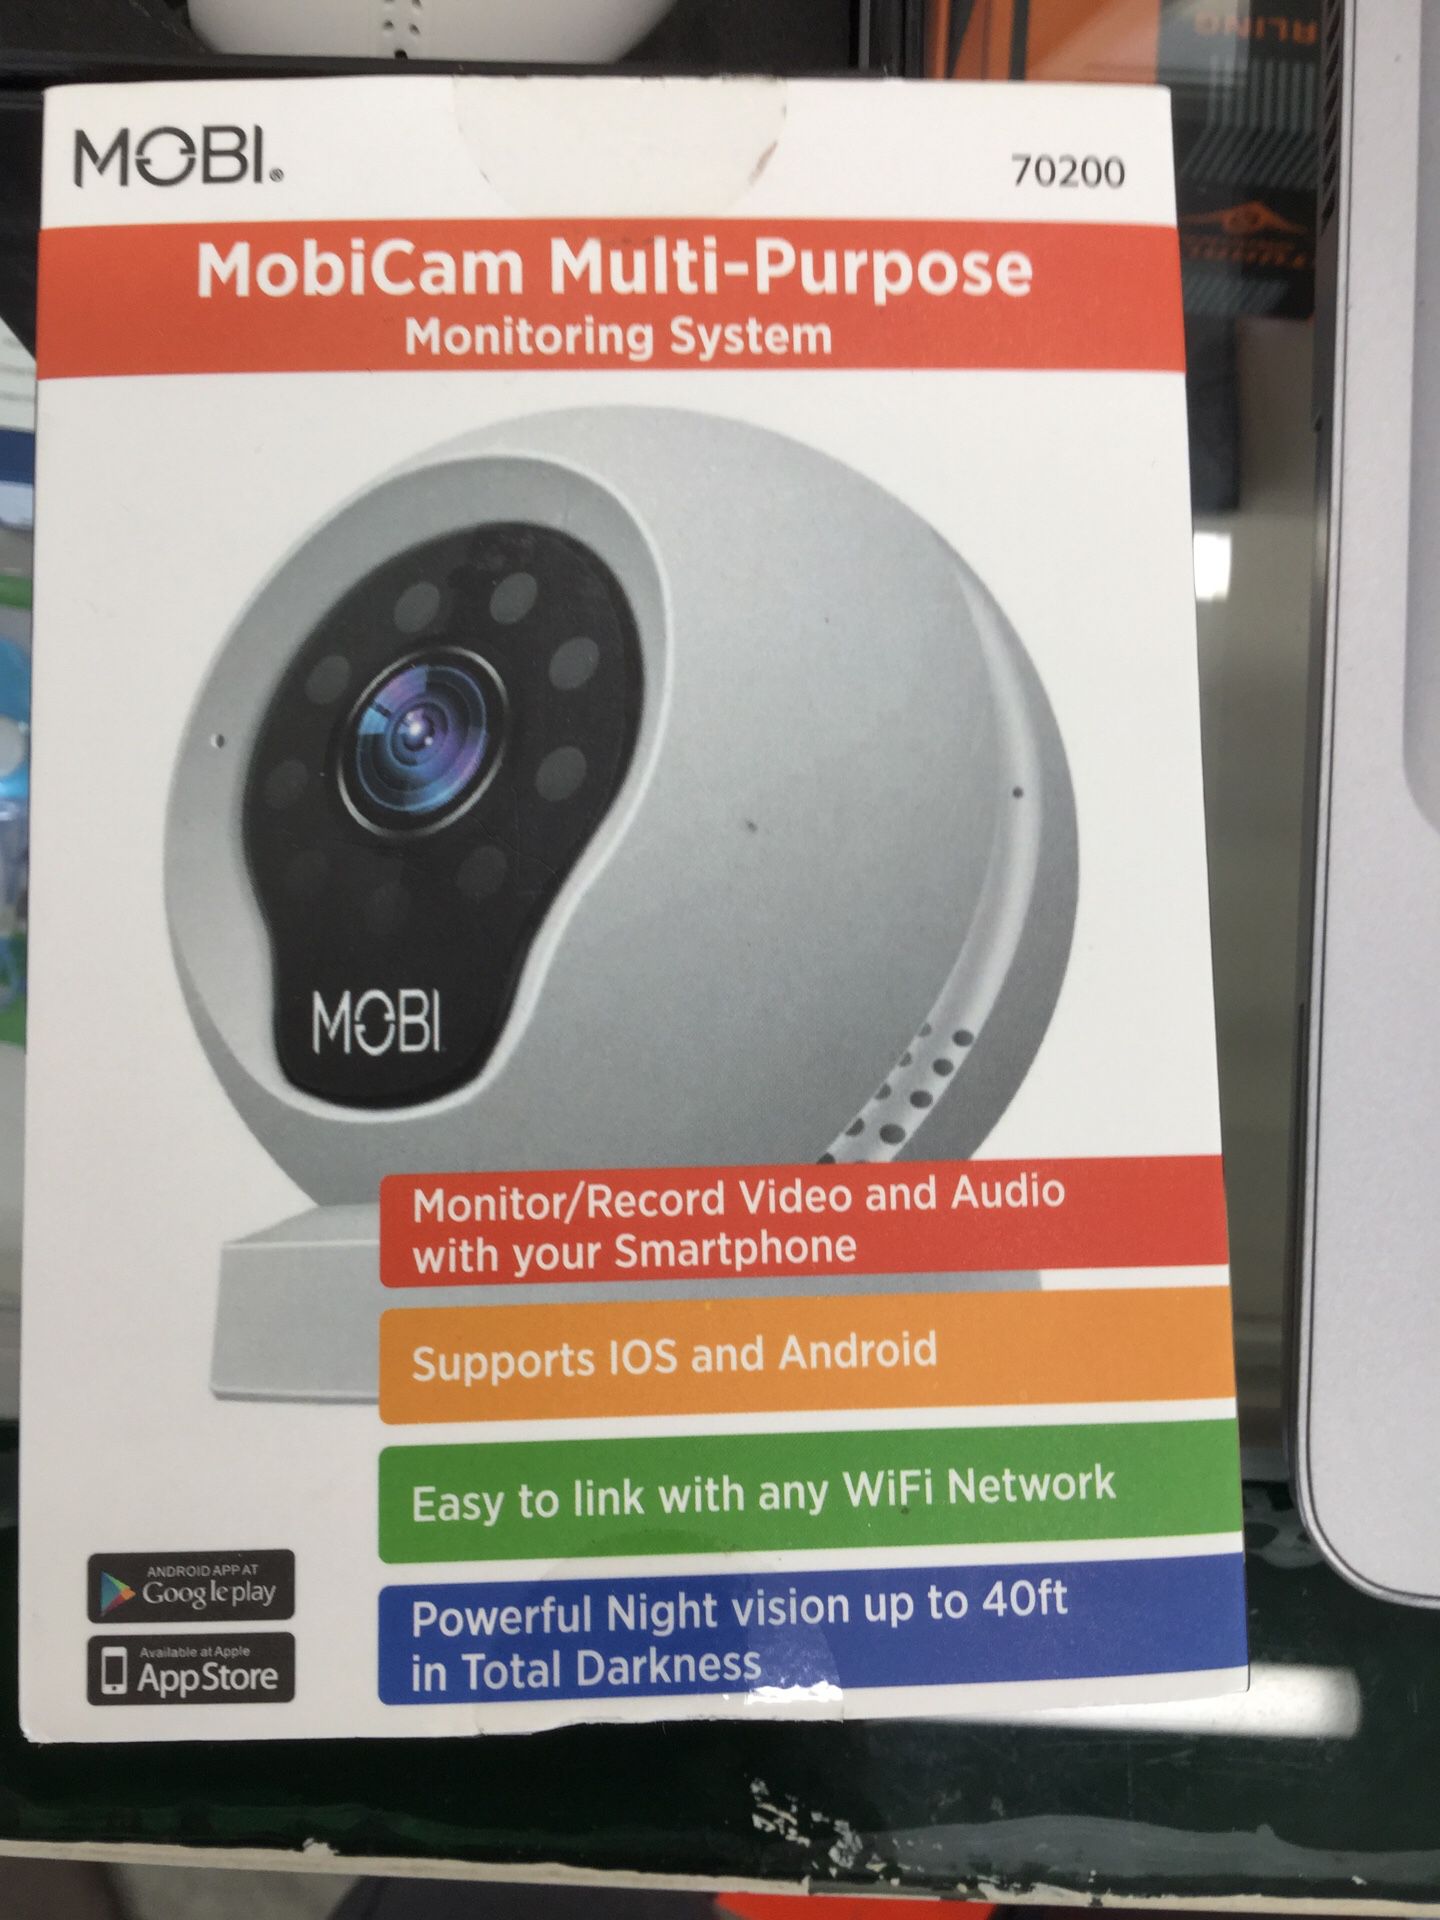 Mobi Mobicam multi purpose WiFi video baby monitor opened box looks new